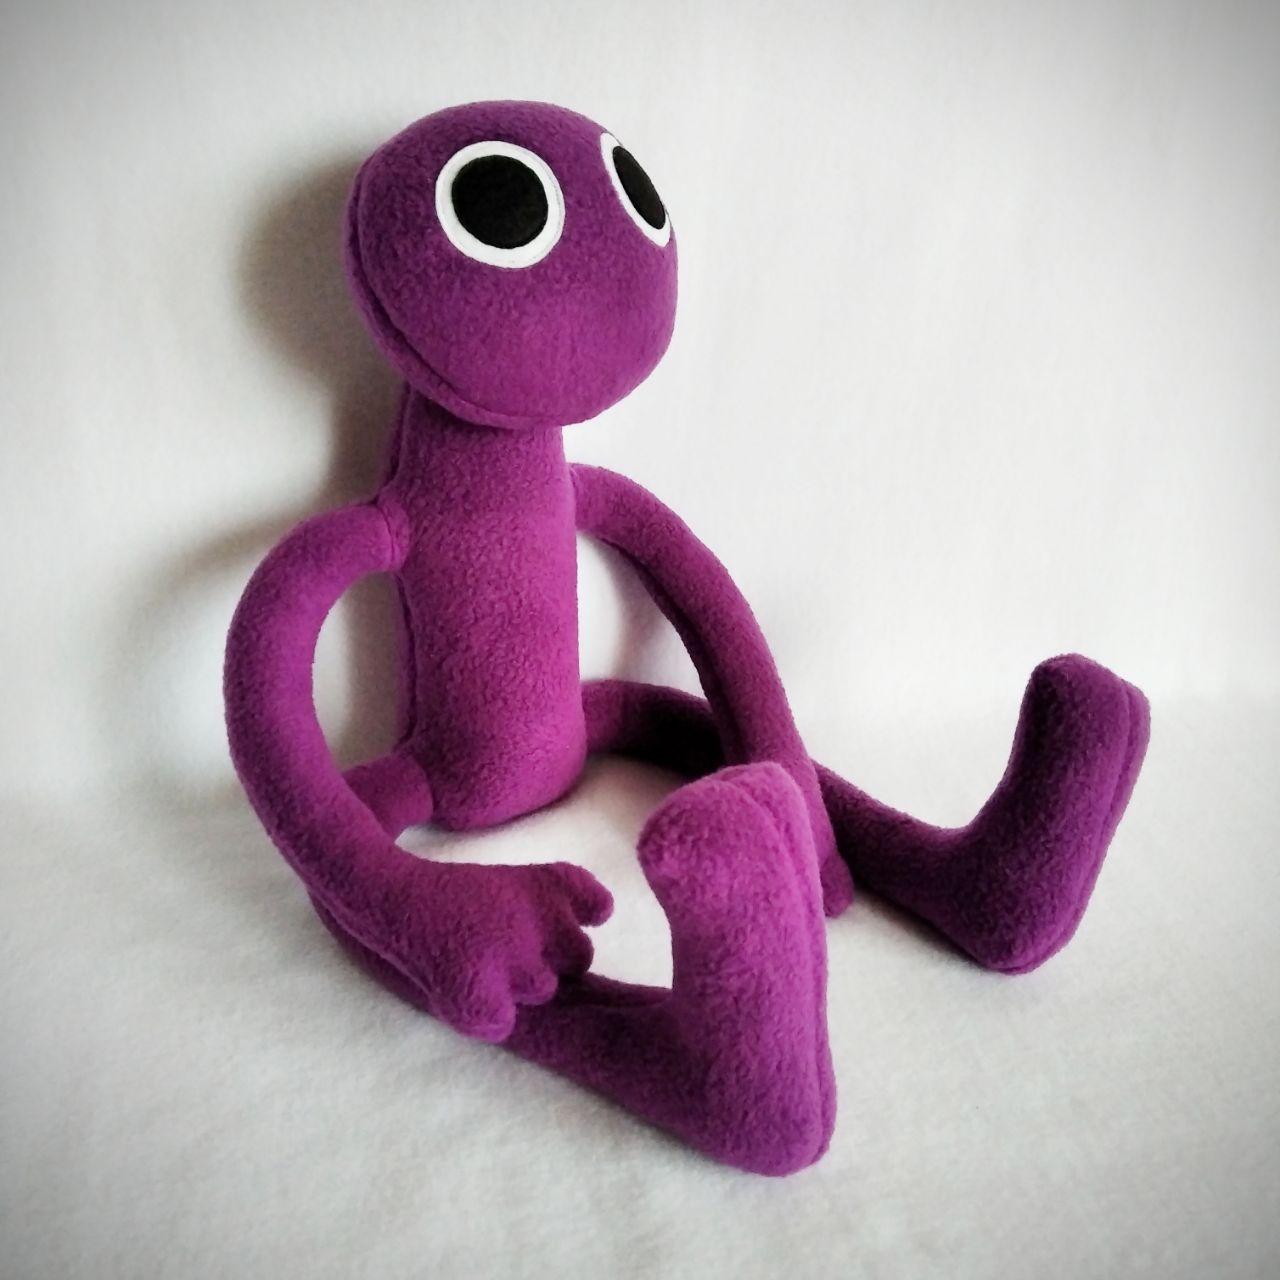 TwCare Rainbow Friends Purple Plush Toy, Soft Stuffed Animal